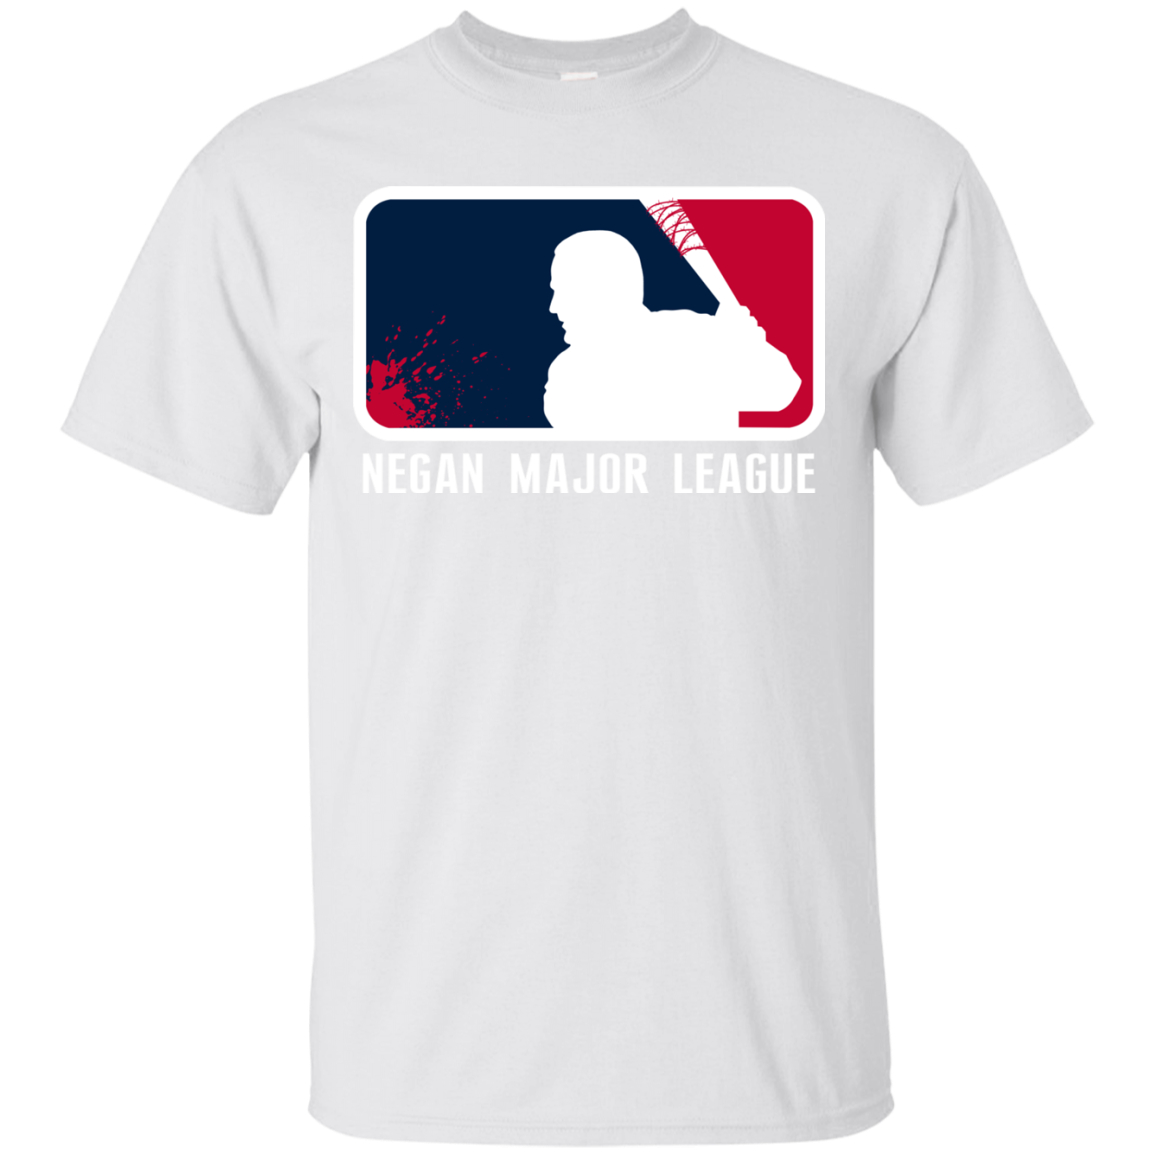 Negan Mayor League T-Shirt